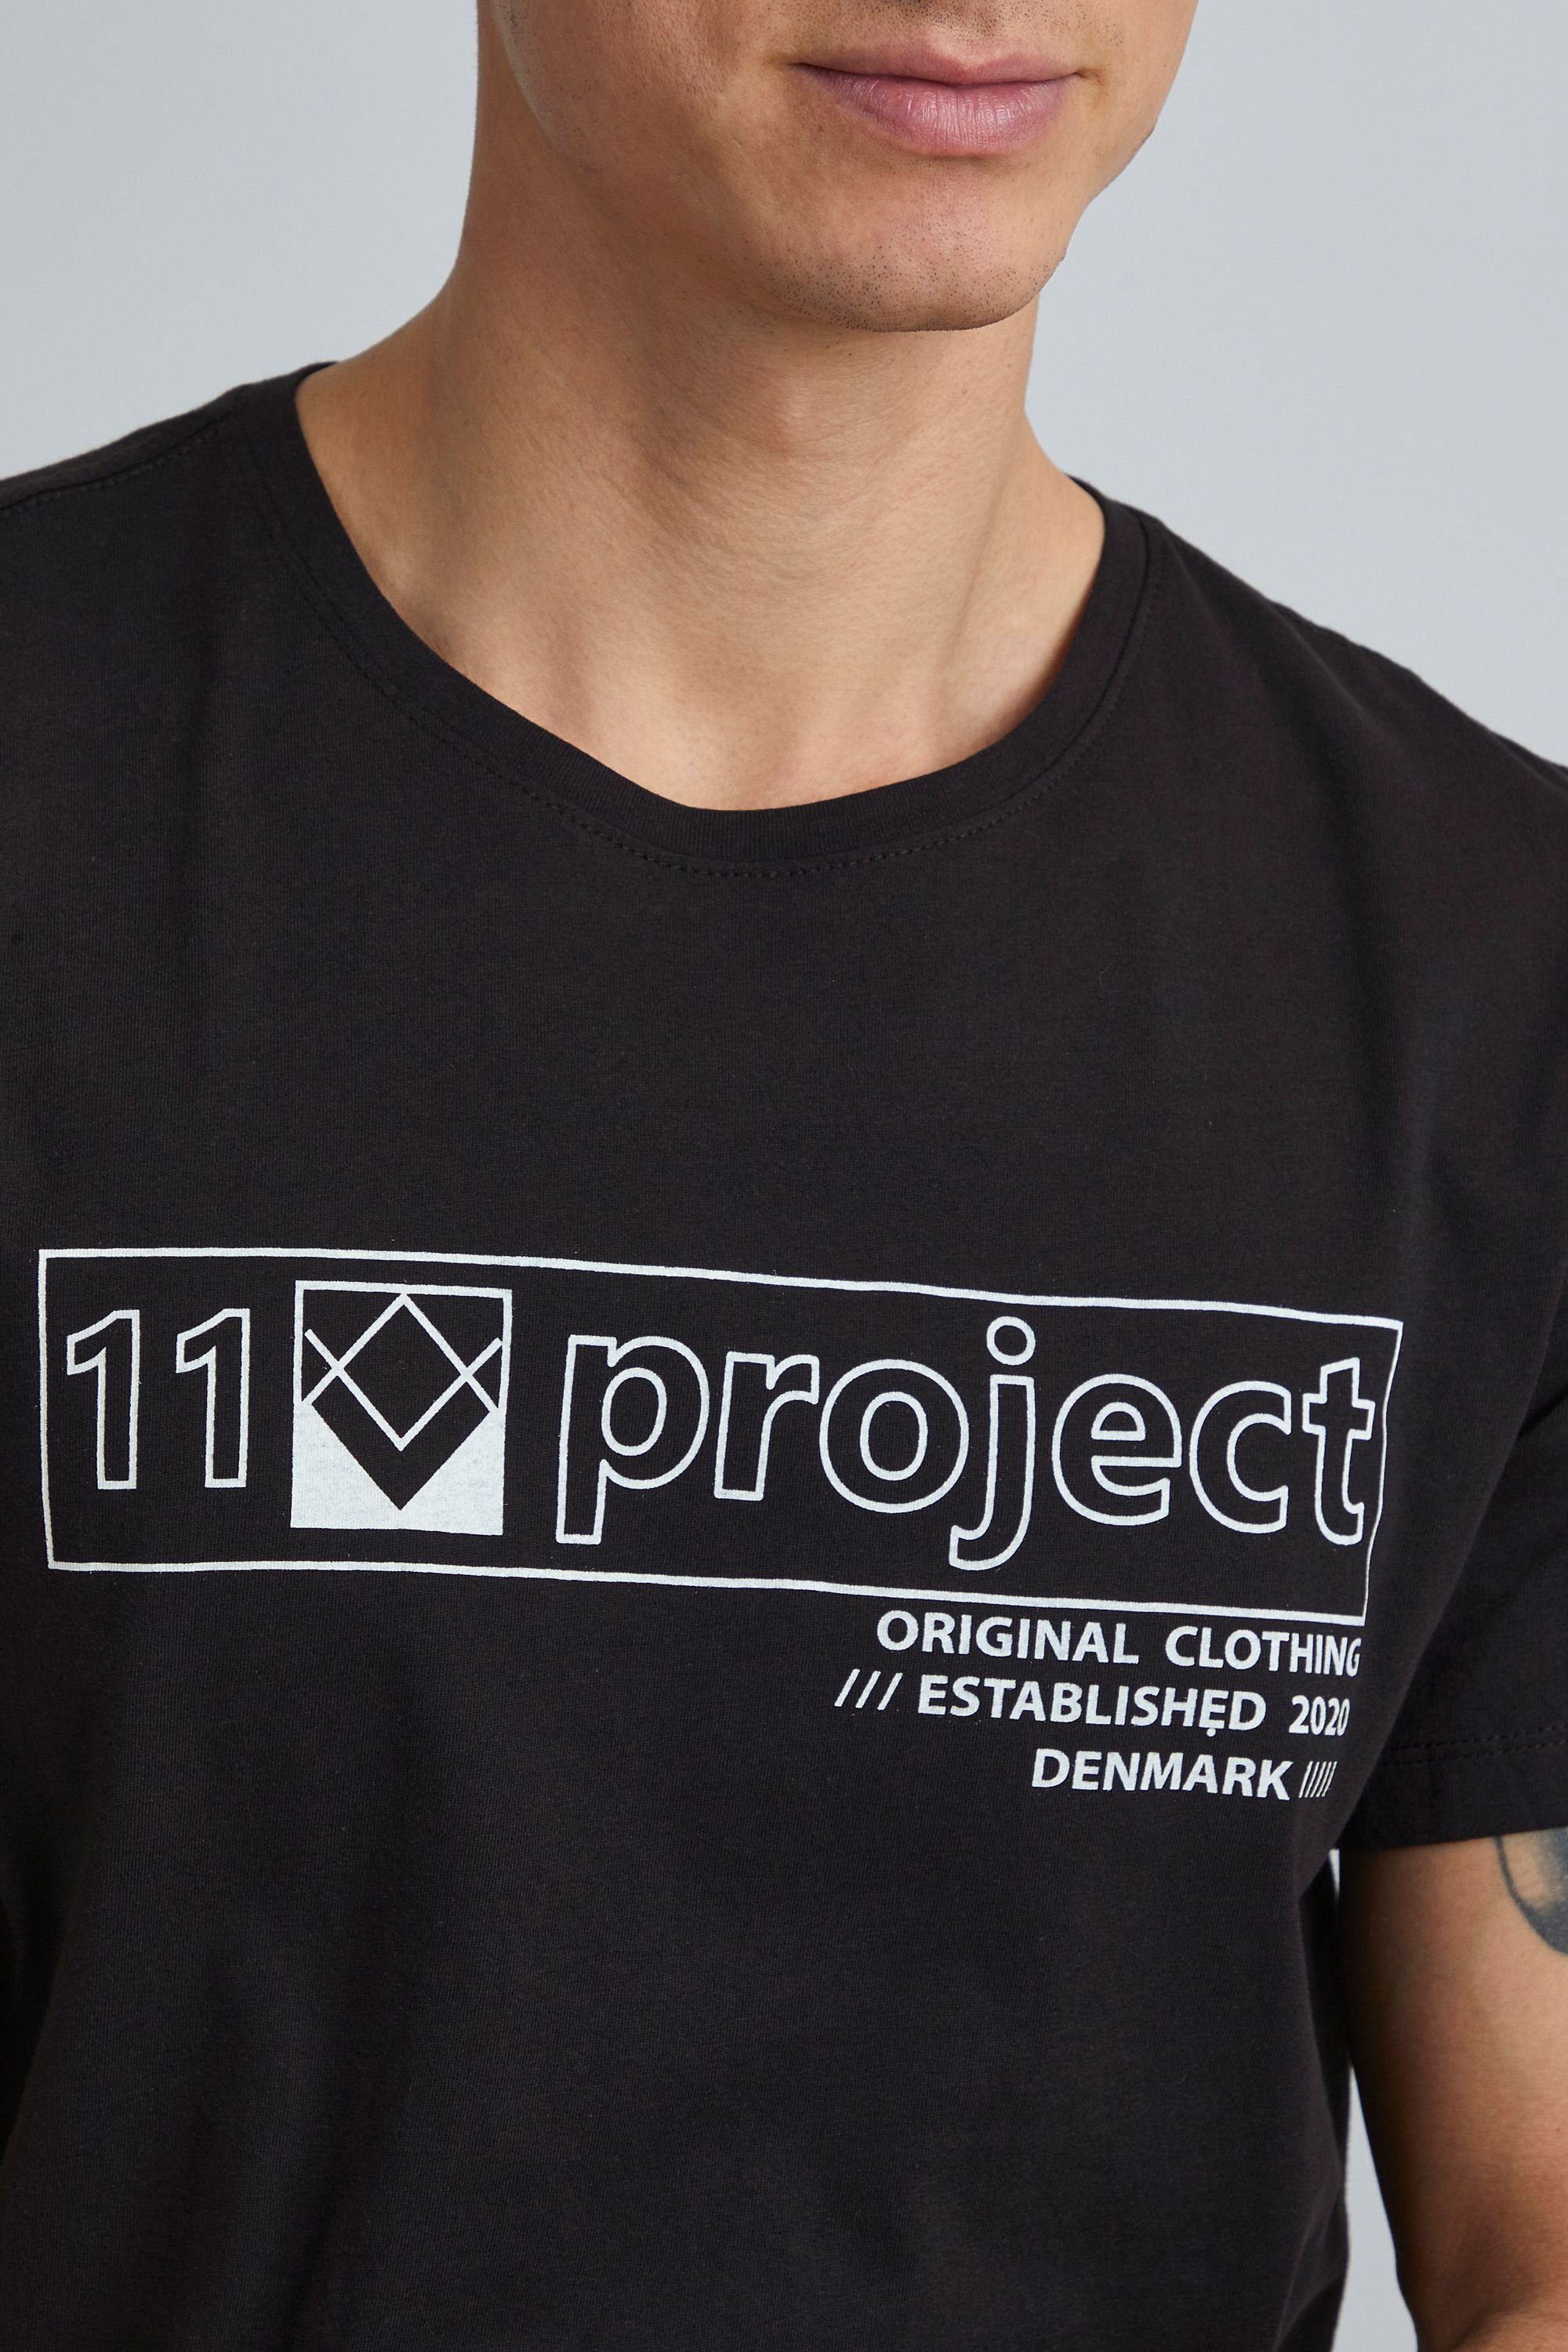 11 Project T-Shirt 11 Project PRMattis Black